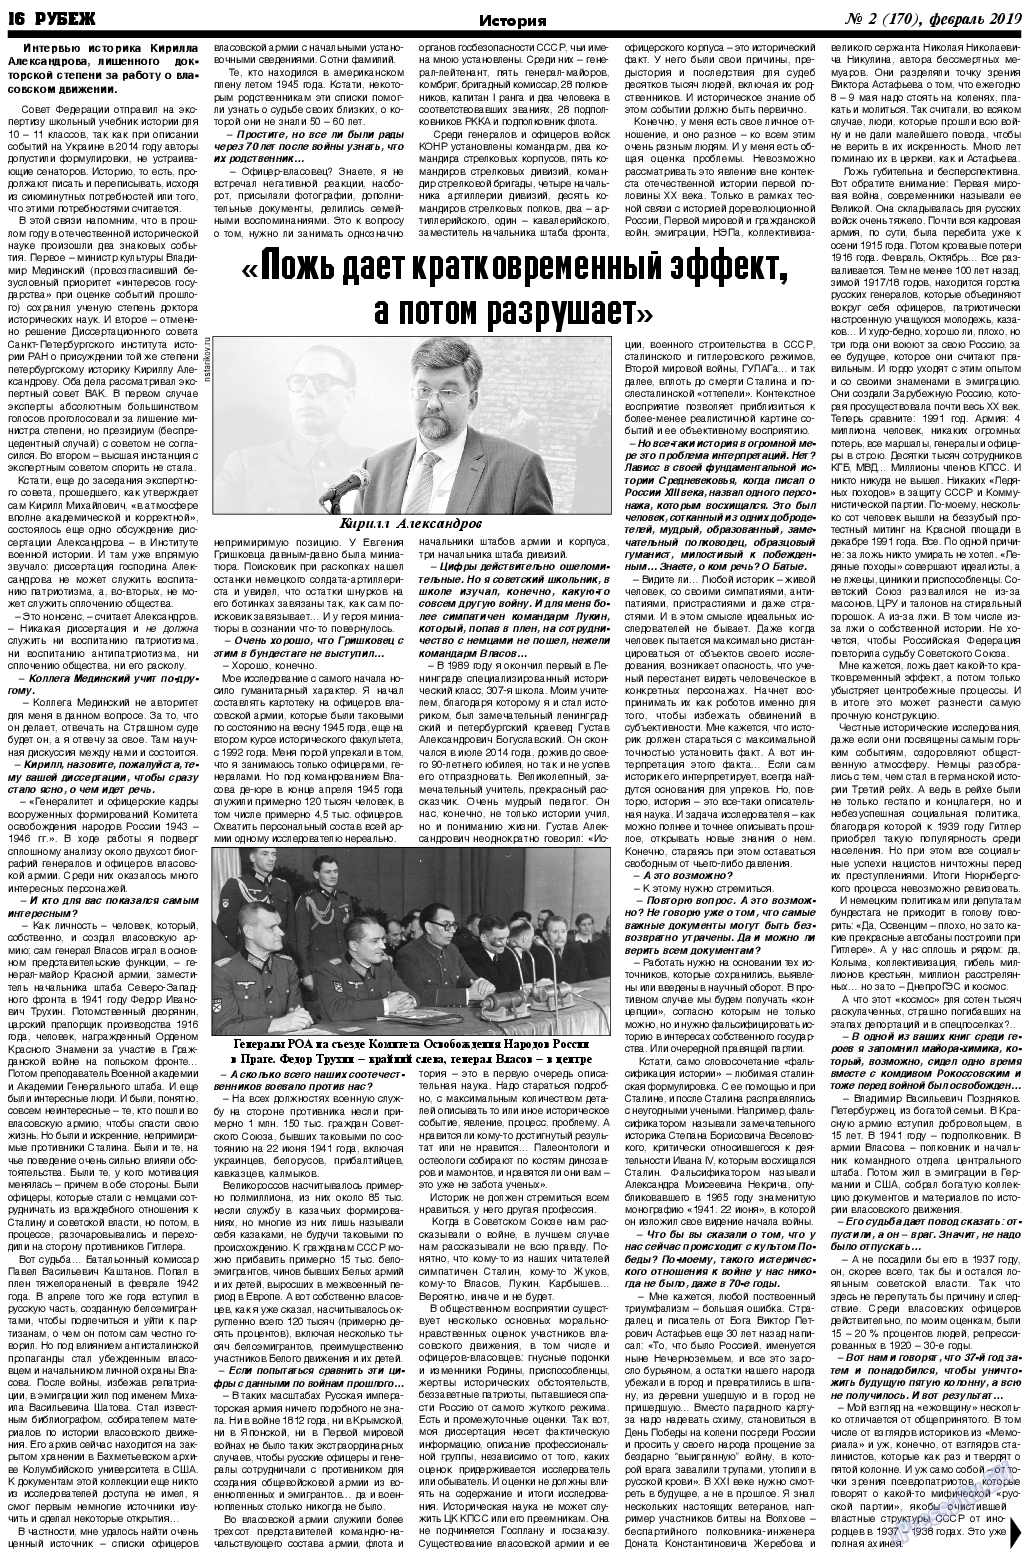 Рубеж, газета. 2019 №2 стр.16